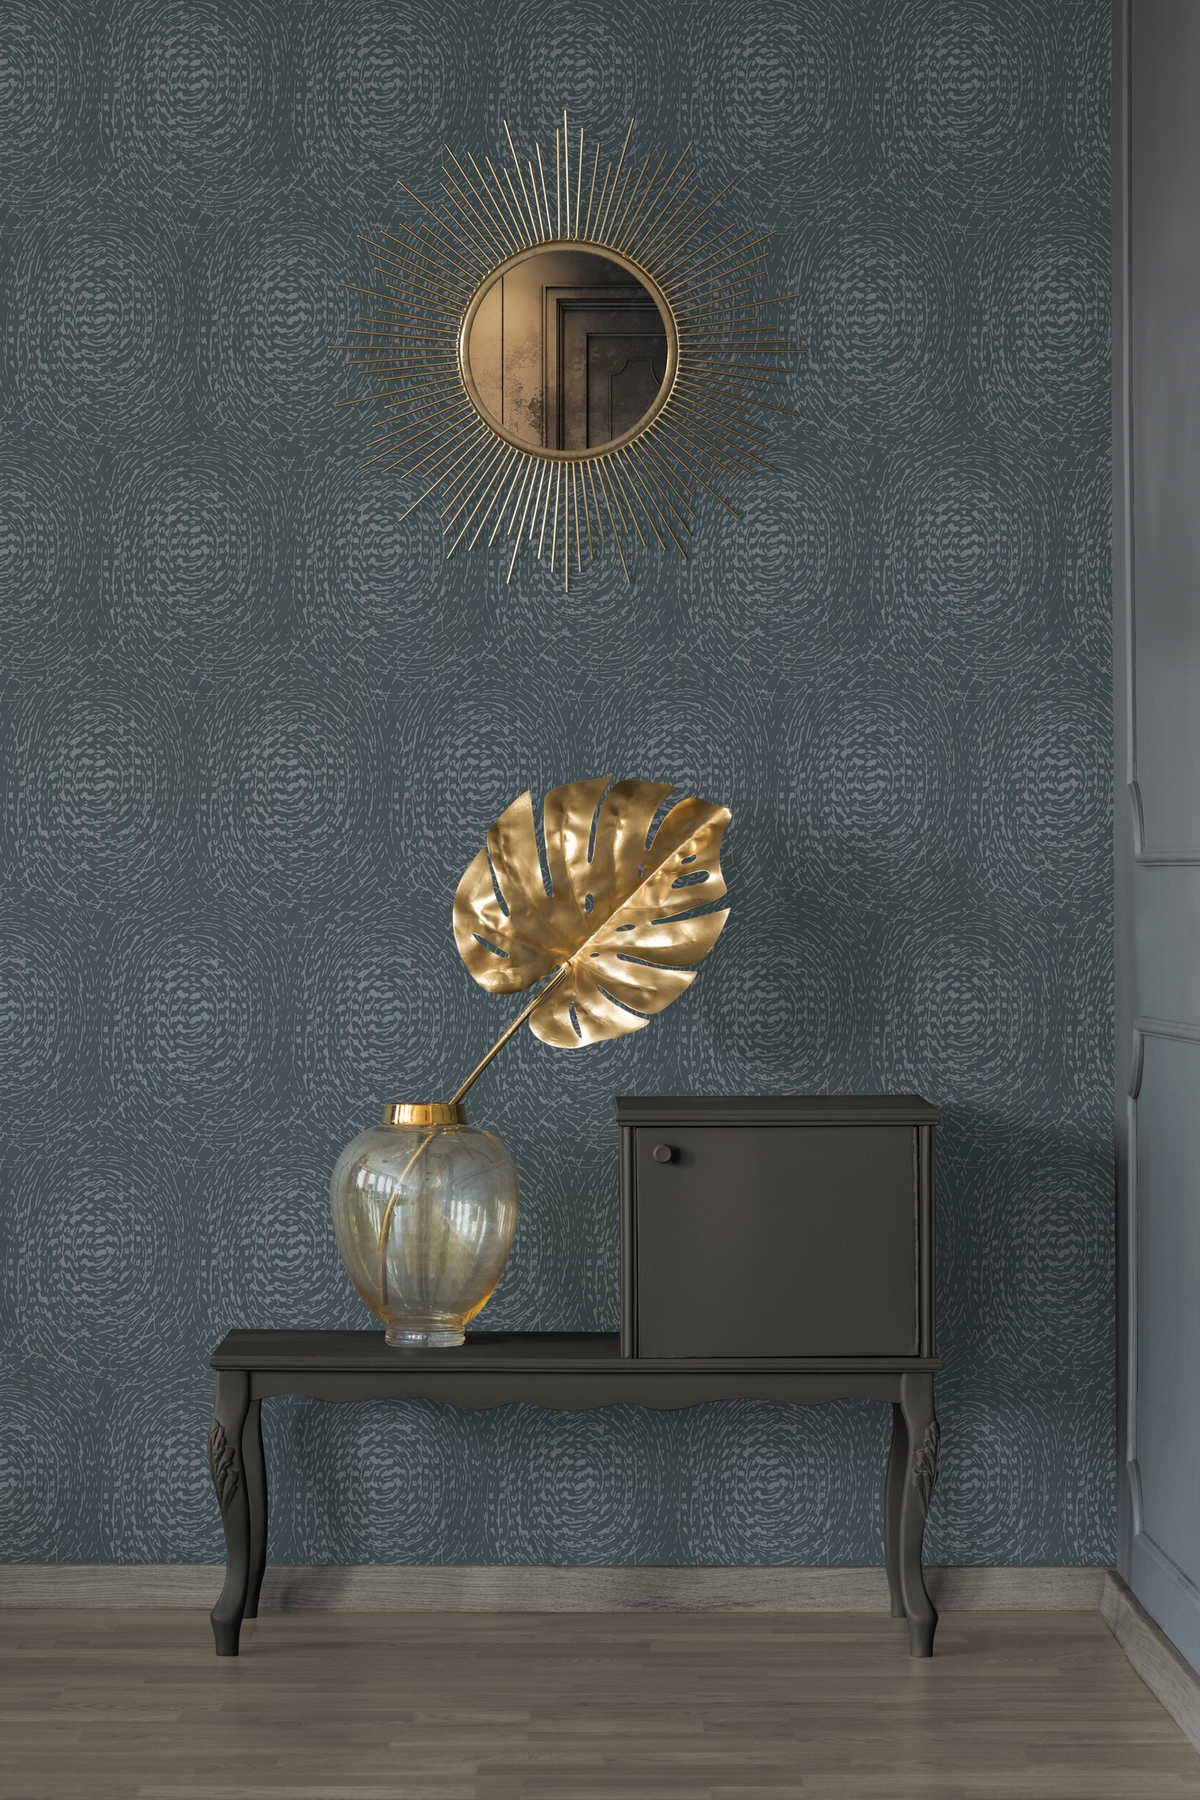             Wallpaper ethnic design with metallic colour & texture design - blue, metallic
        